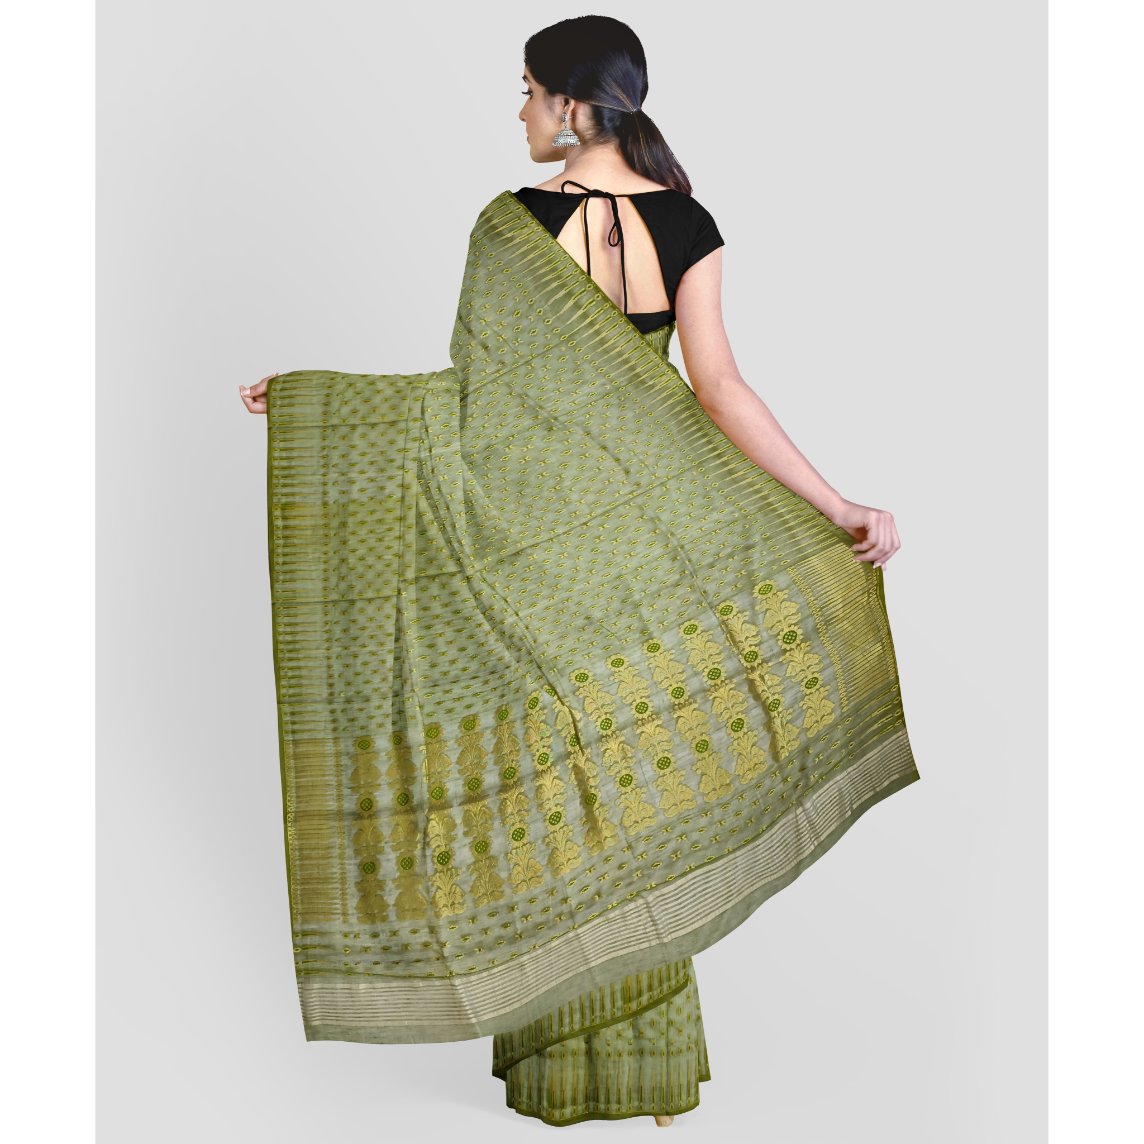 Buy Avushanam Hazar Buti Jamdani Work Woven Cotton Saree With Blouse Piece  (Pink) - D024 at Amazon.in